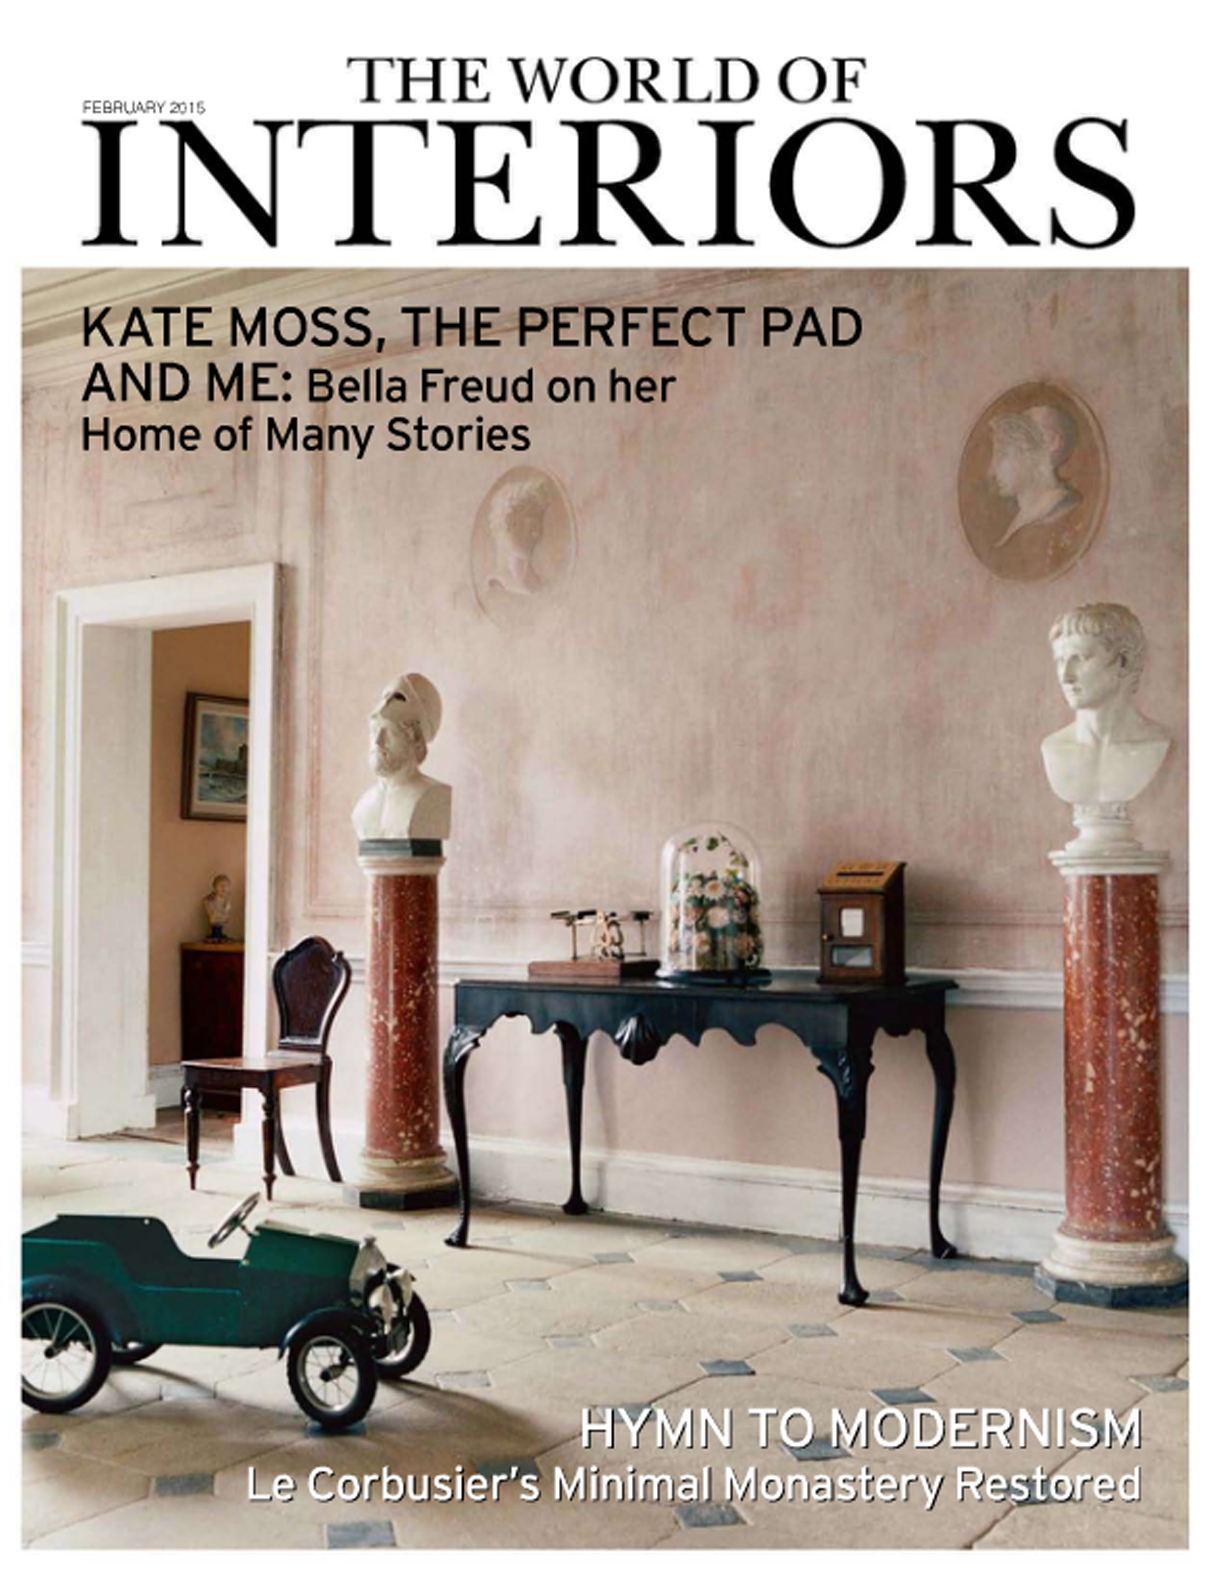 World of interiors magazine Kingham bespoke kitchen design feature February 2015